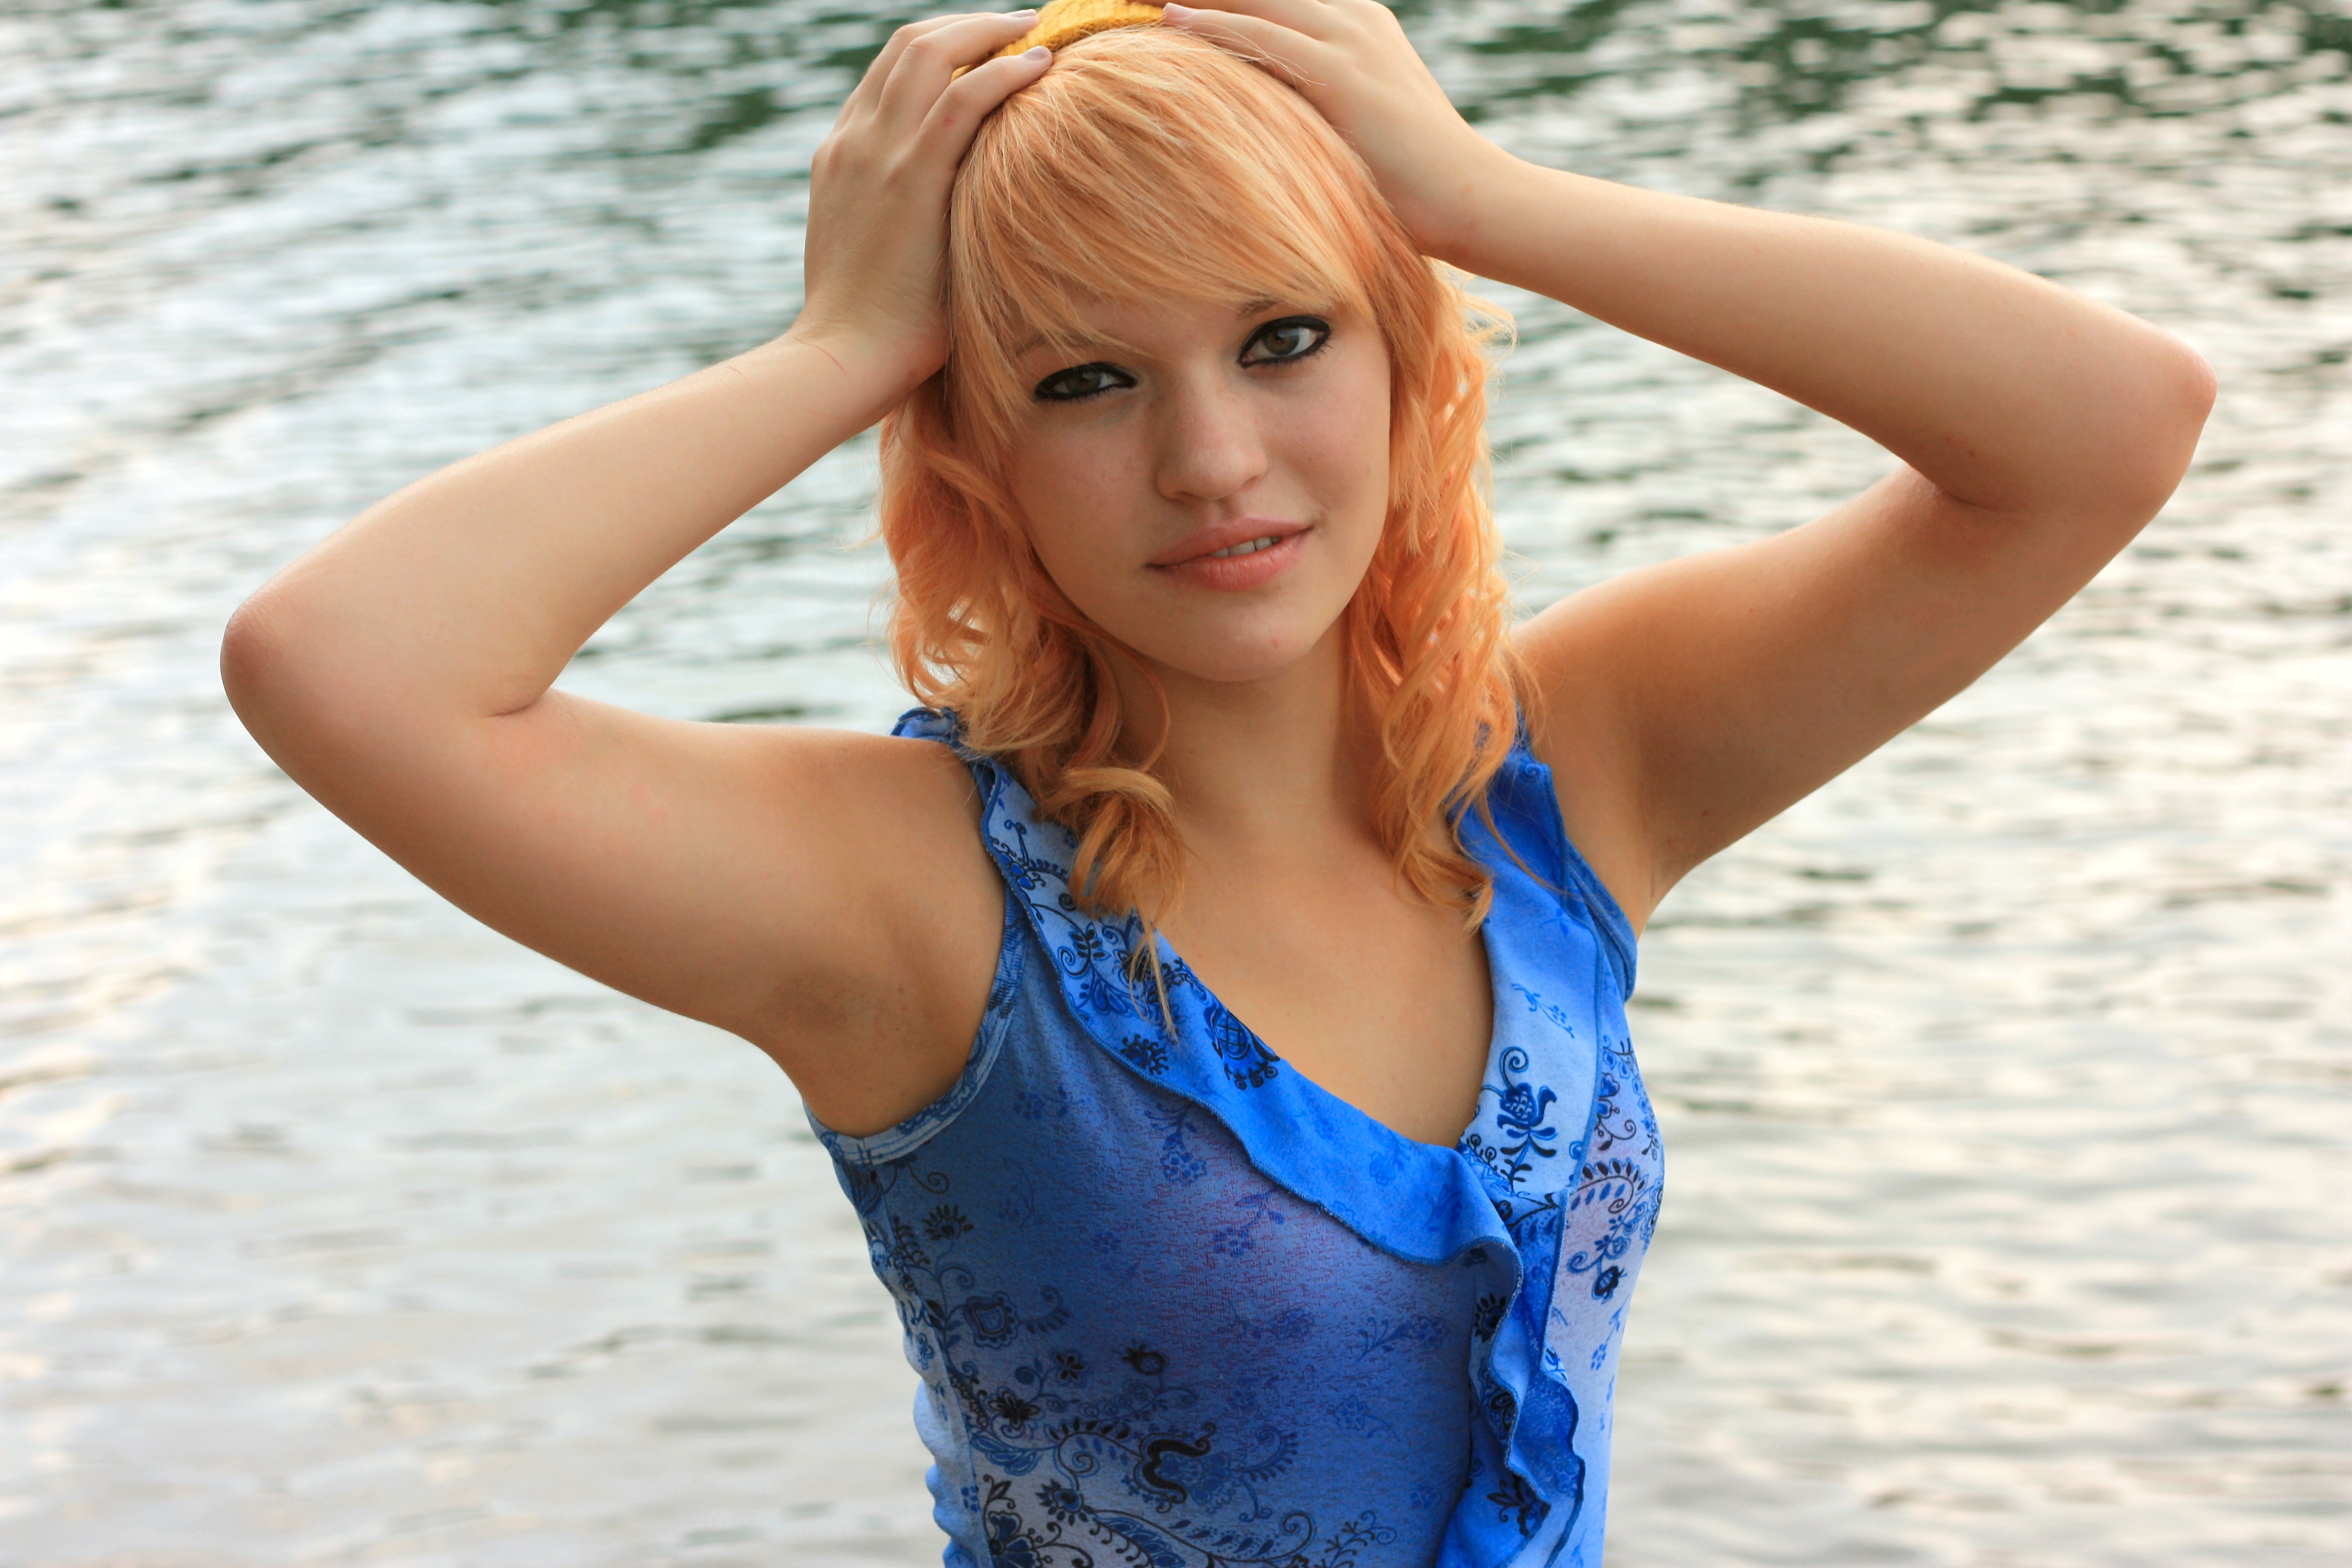 A beautiful young woman posing by a lake photo